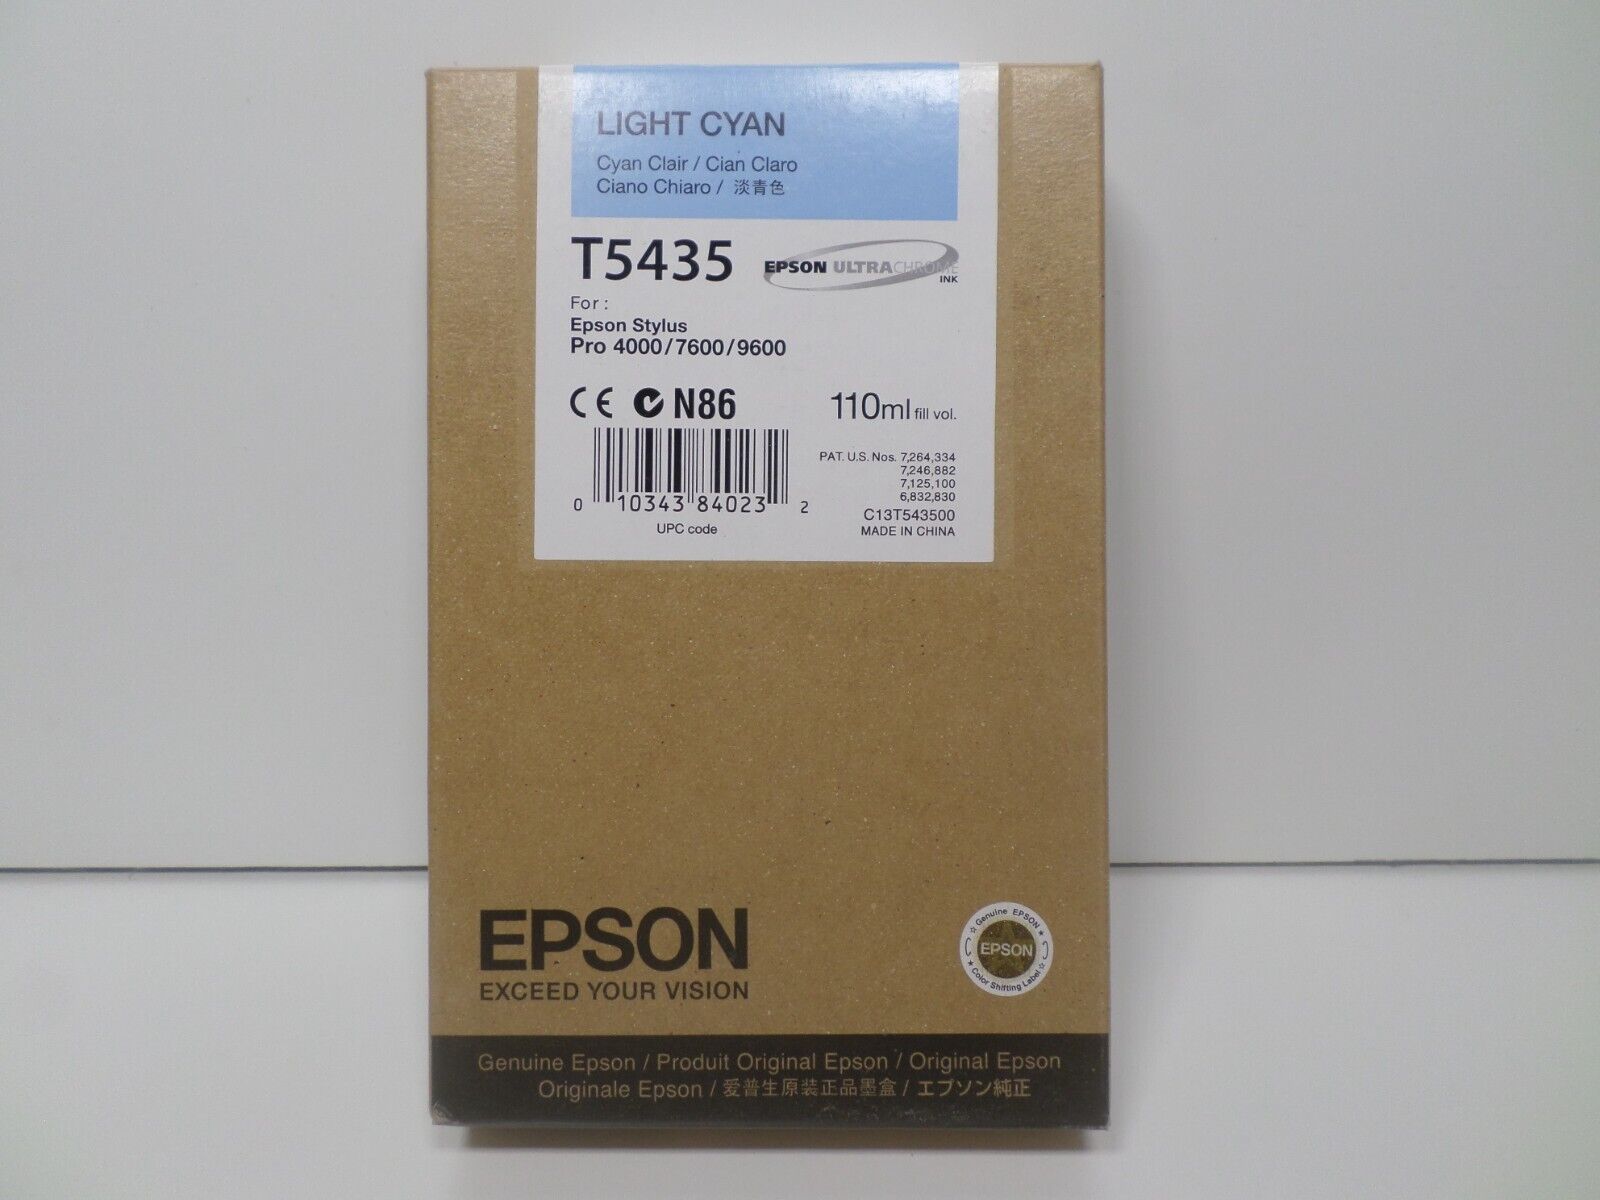 01/2013 NIB Epson Genuine 110ml Ink T5435 Light Cyan Stylus Pro 4000/7600/9600